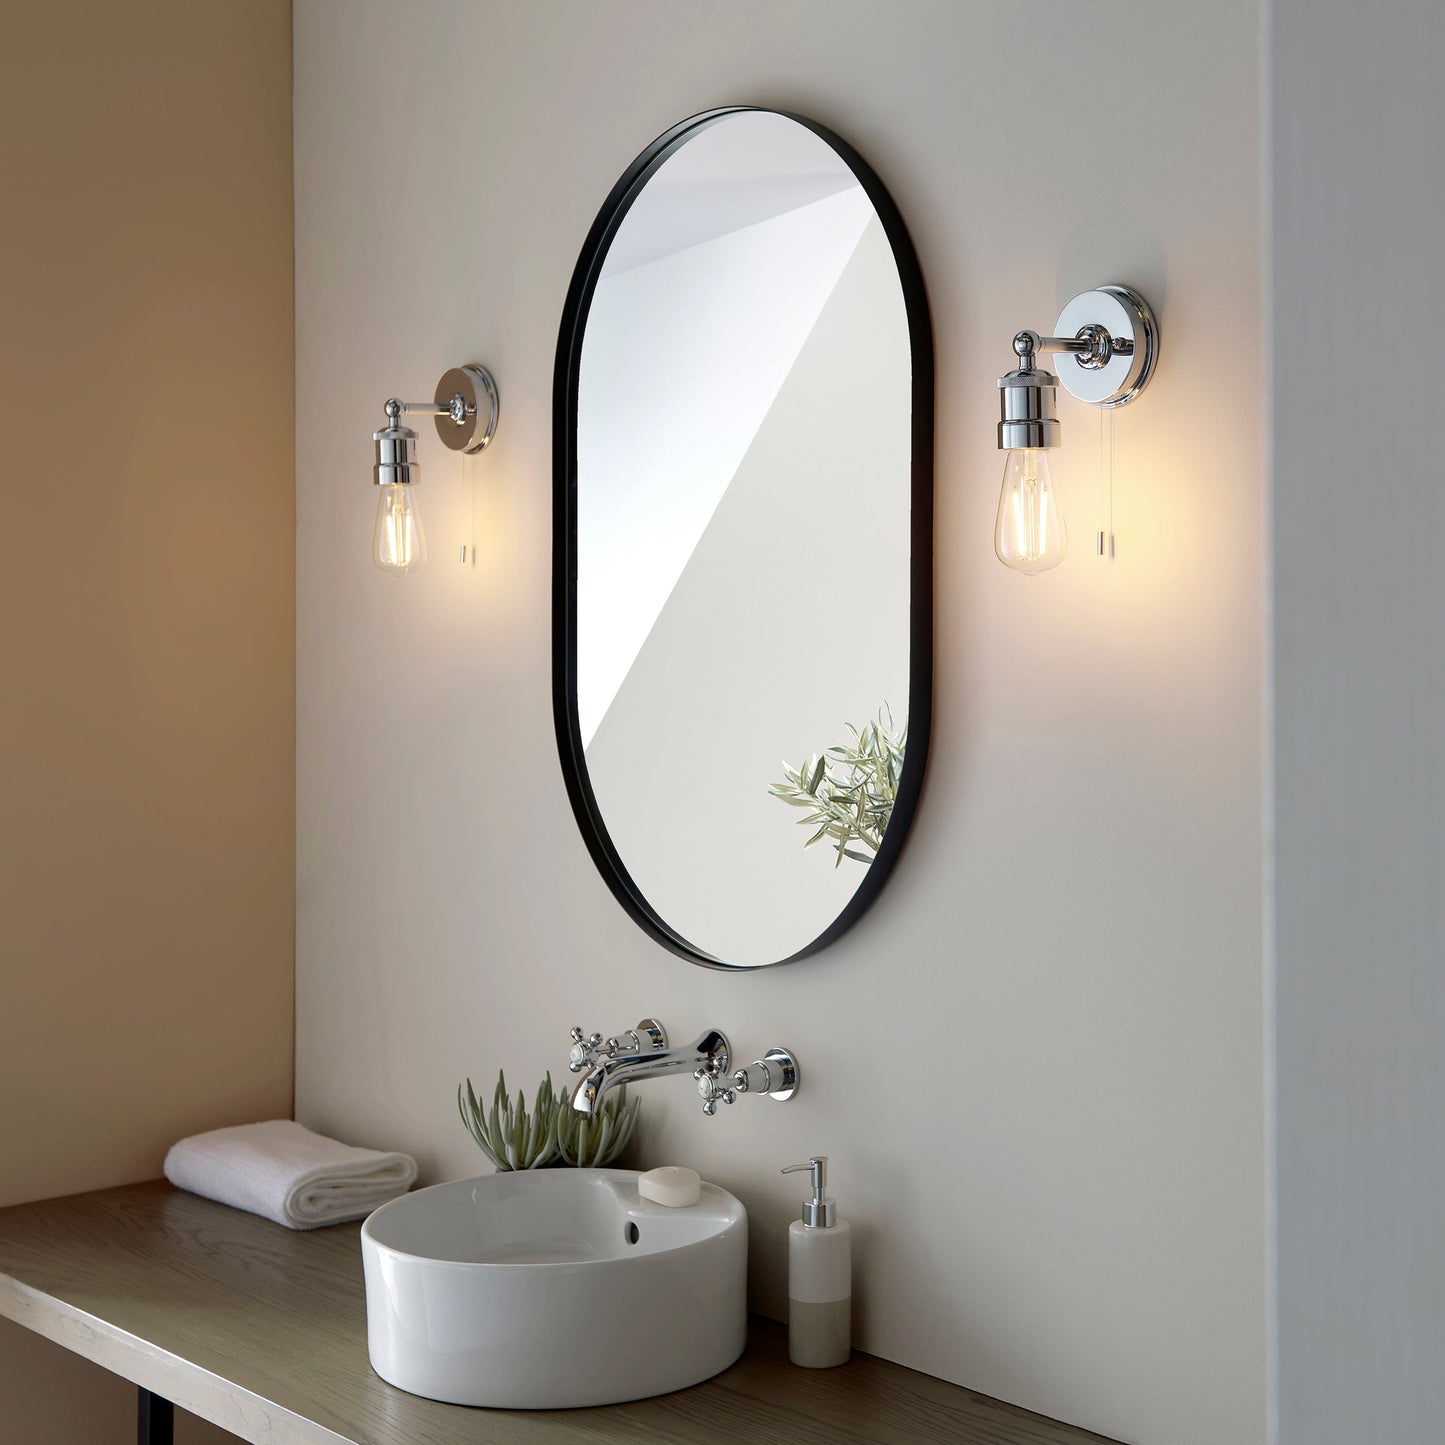 Industrial Knurled Chrome Bathroom Wall Light - ID 11663